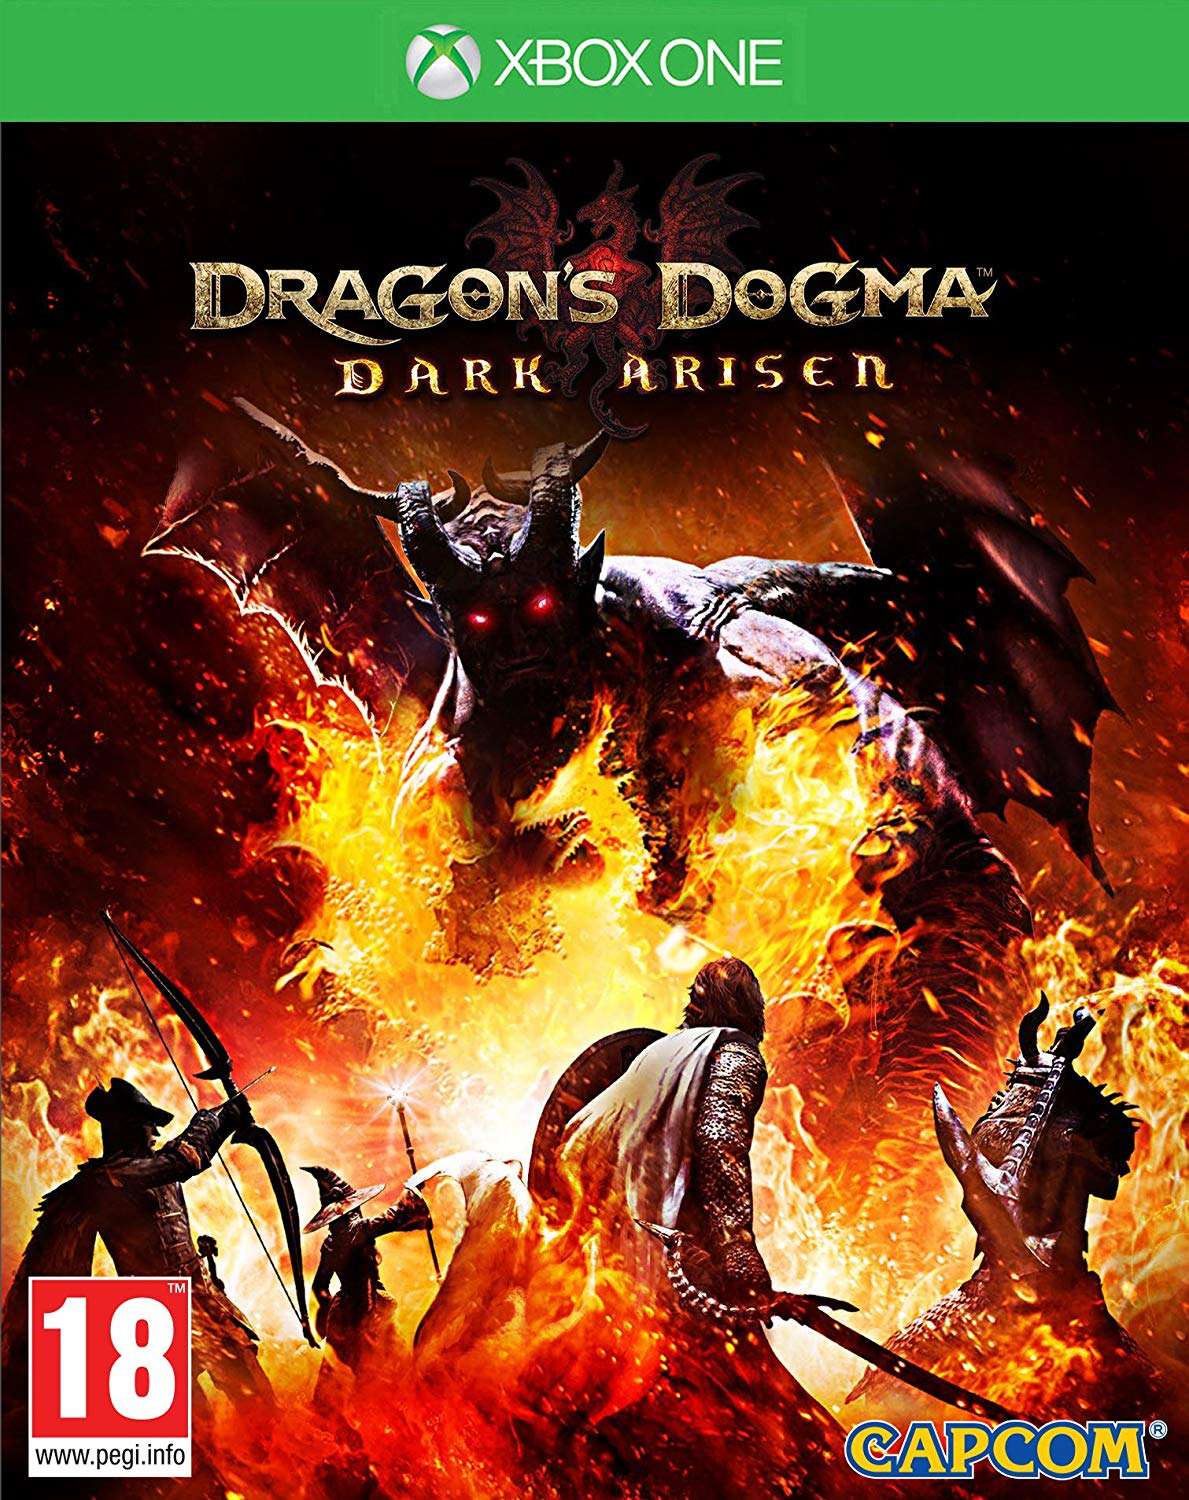 Dragons Dogma Dark Arisen for XBOXONE to rent